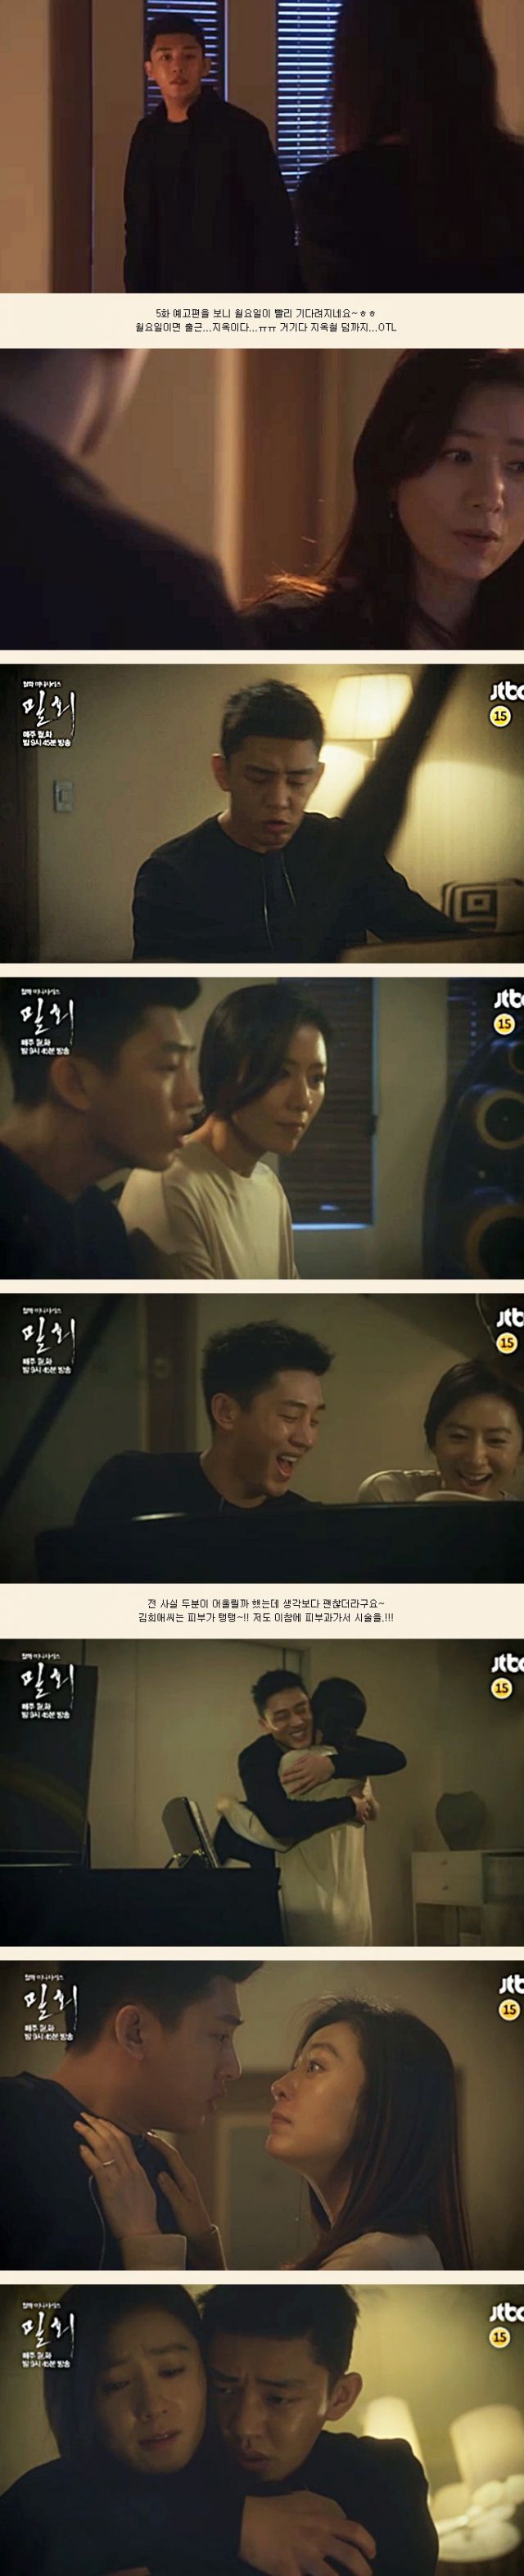 episode 5 captures for the Korean drama 'Secret Love Affair'